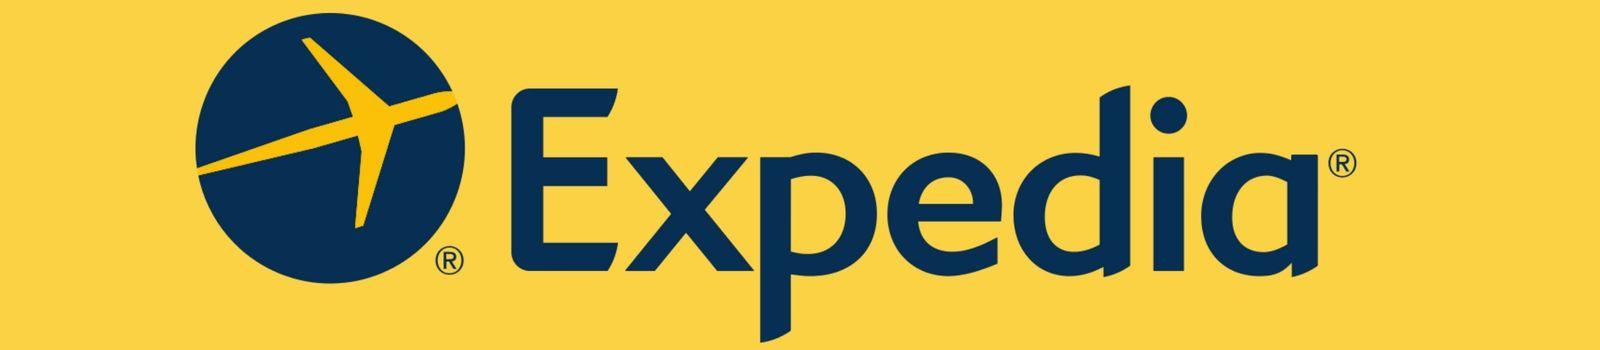 Expedia Plane Logo - Expedia Flight Deals in 2019 Updated Weekly | Skyscanner